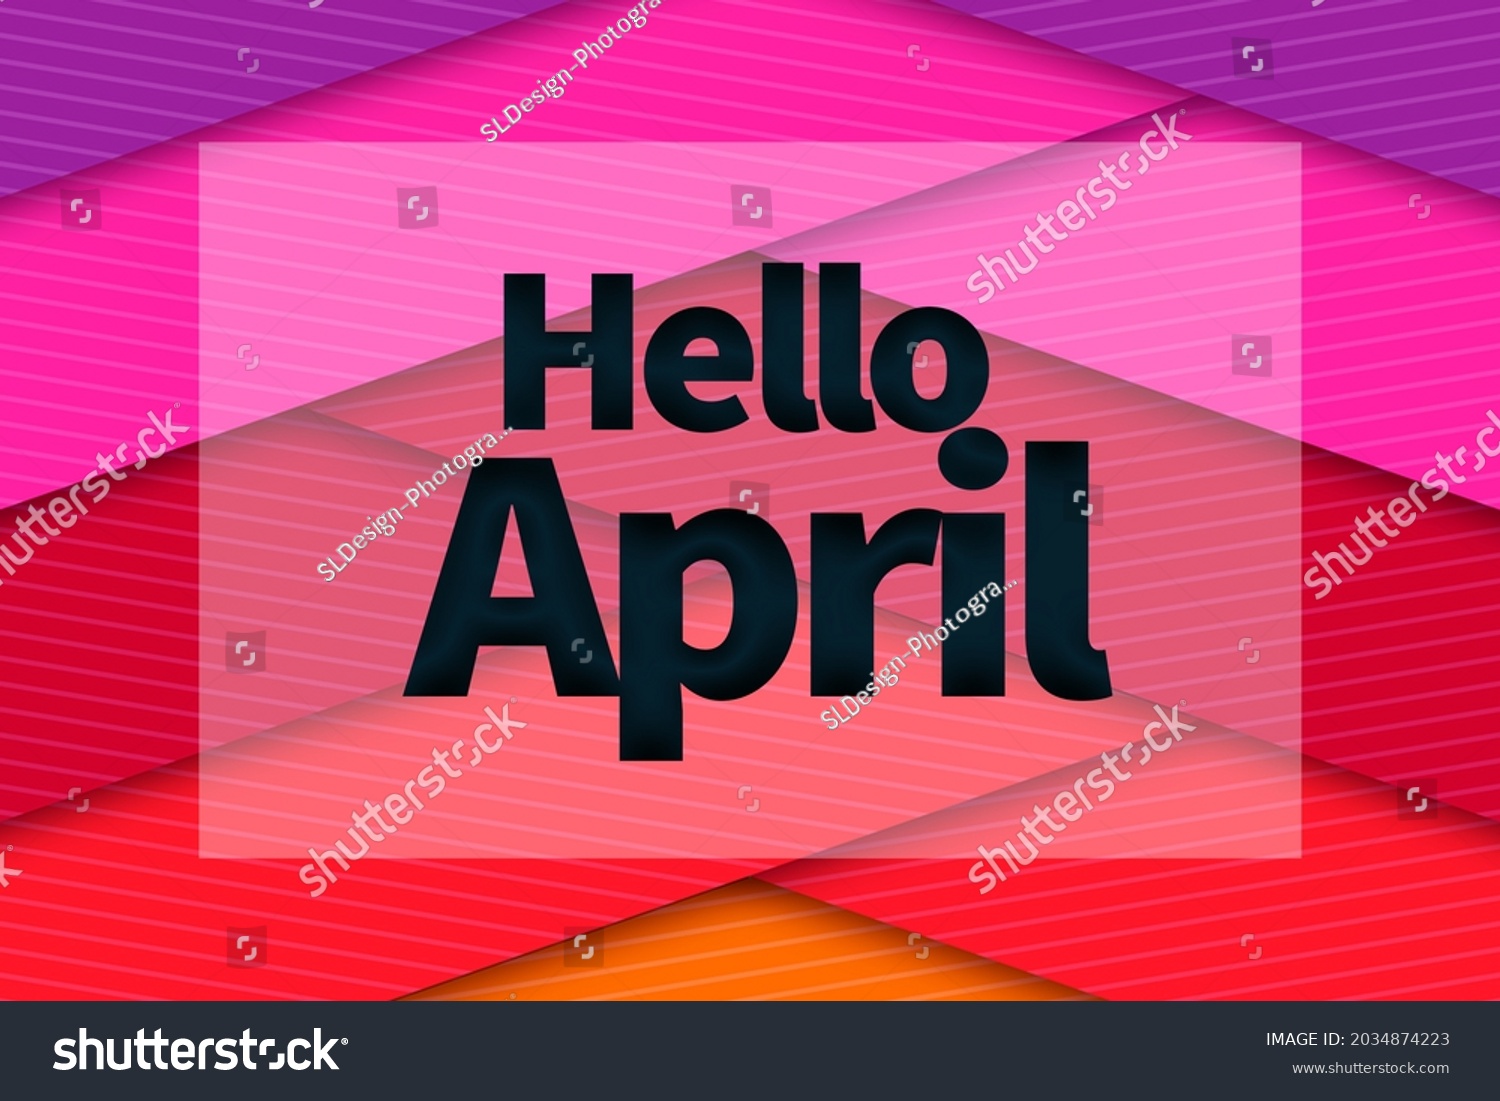 Hello April Blue Color Based Vector Stock Illustration 2034874223 Shutterstock